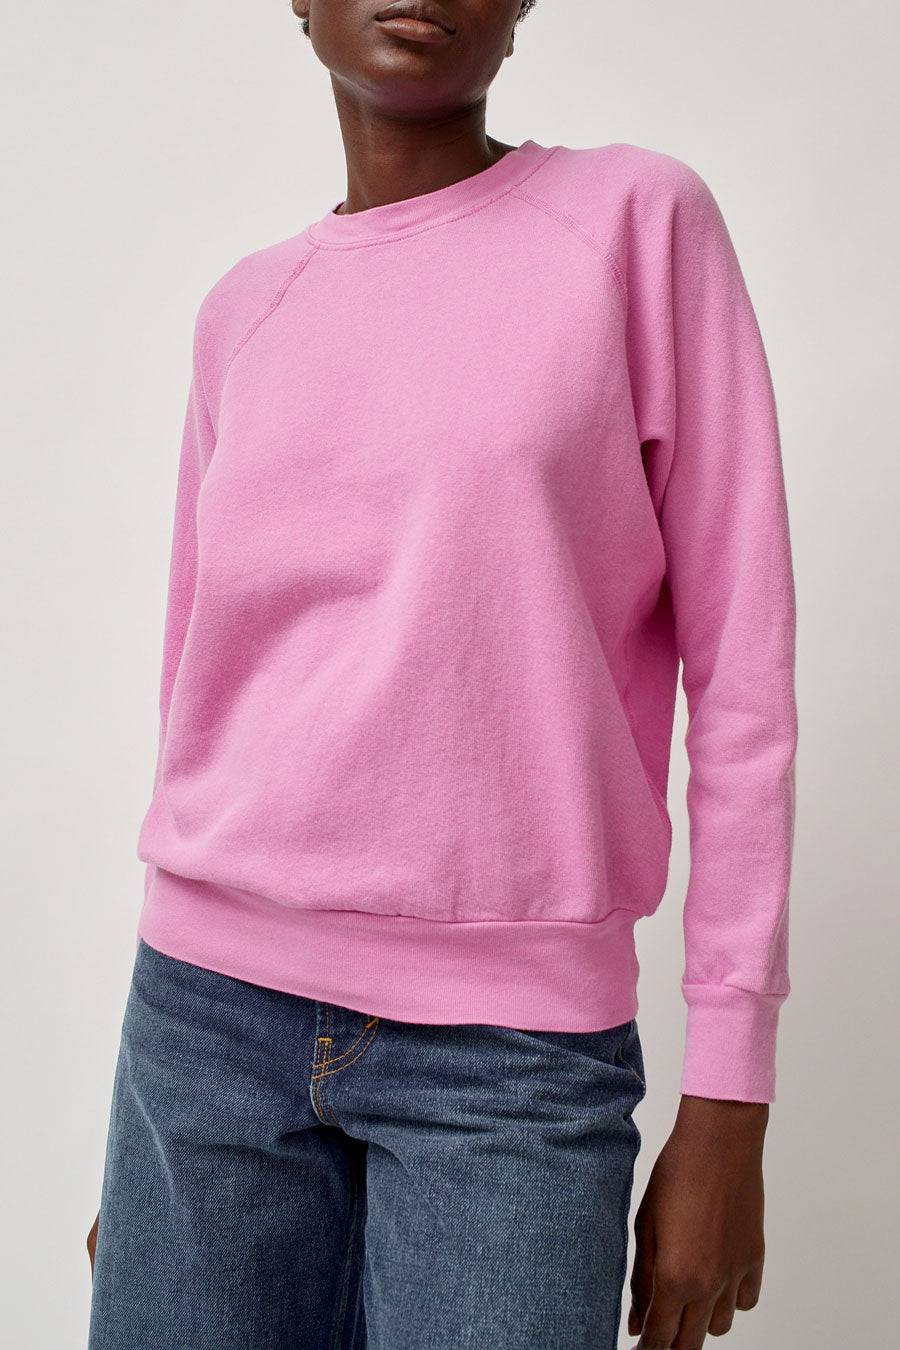 B Sides Crewneck Sweatshirt in Ziggy Pink